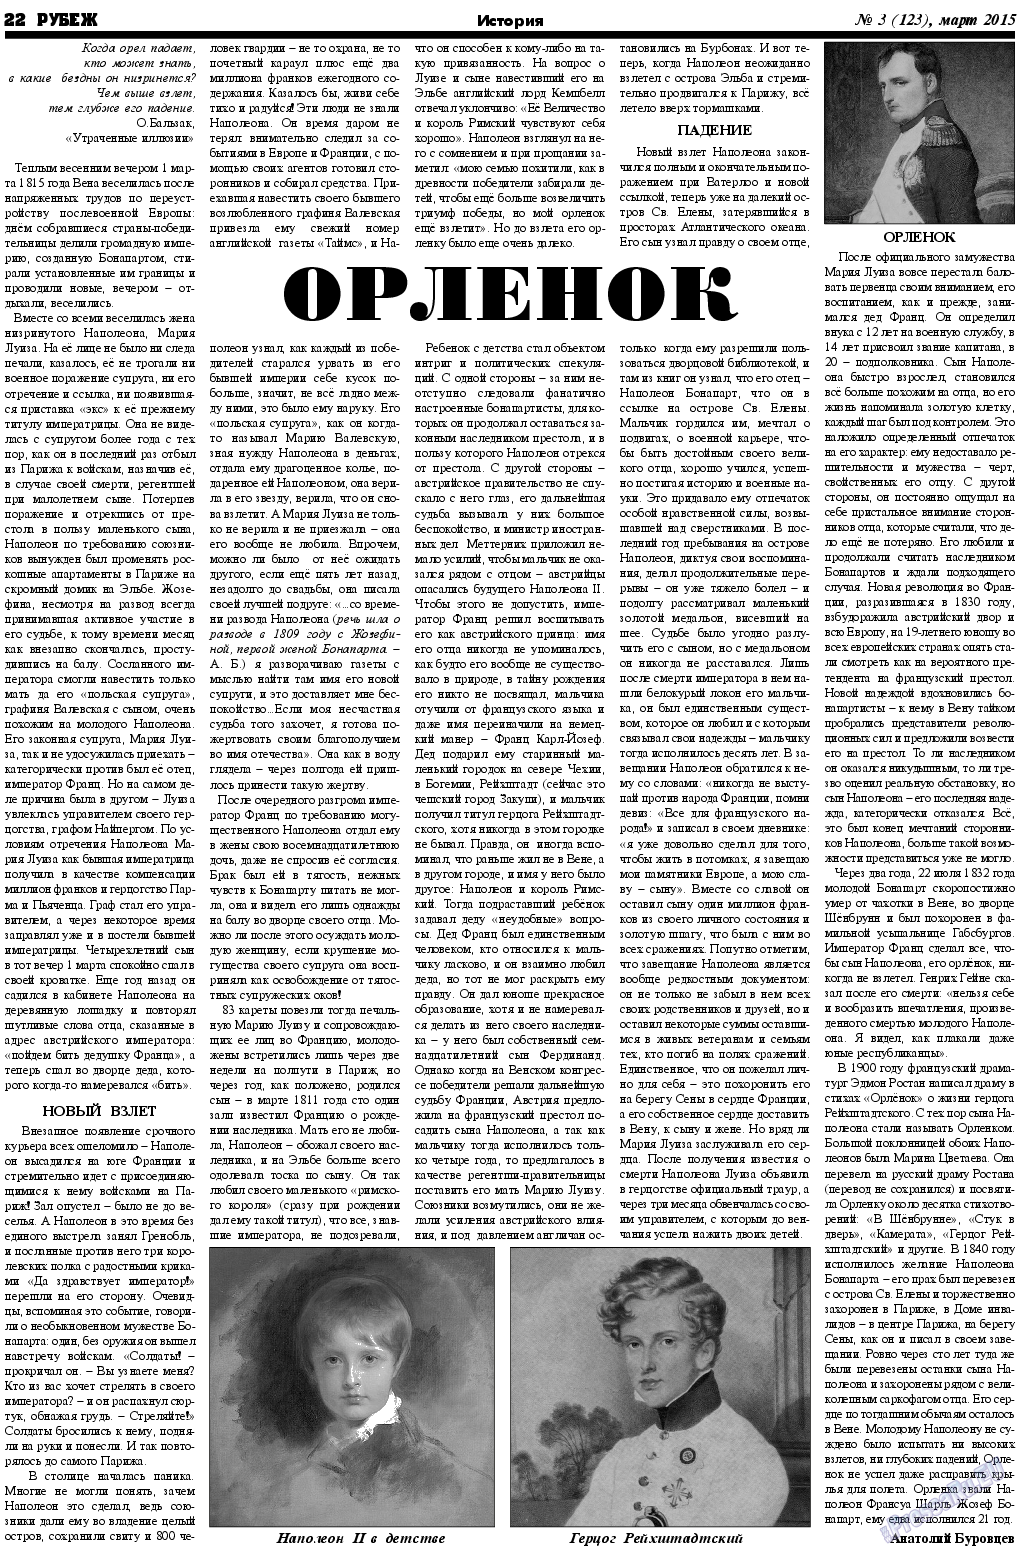 Рубеж, газета. 2015 №3 стр.22